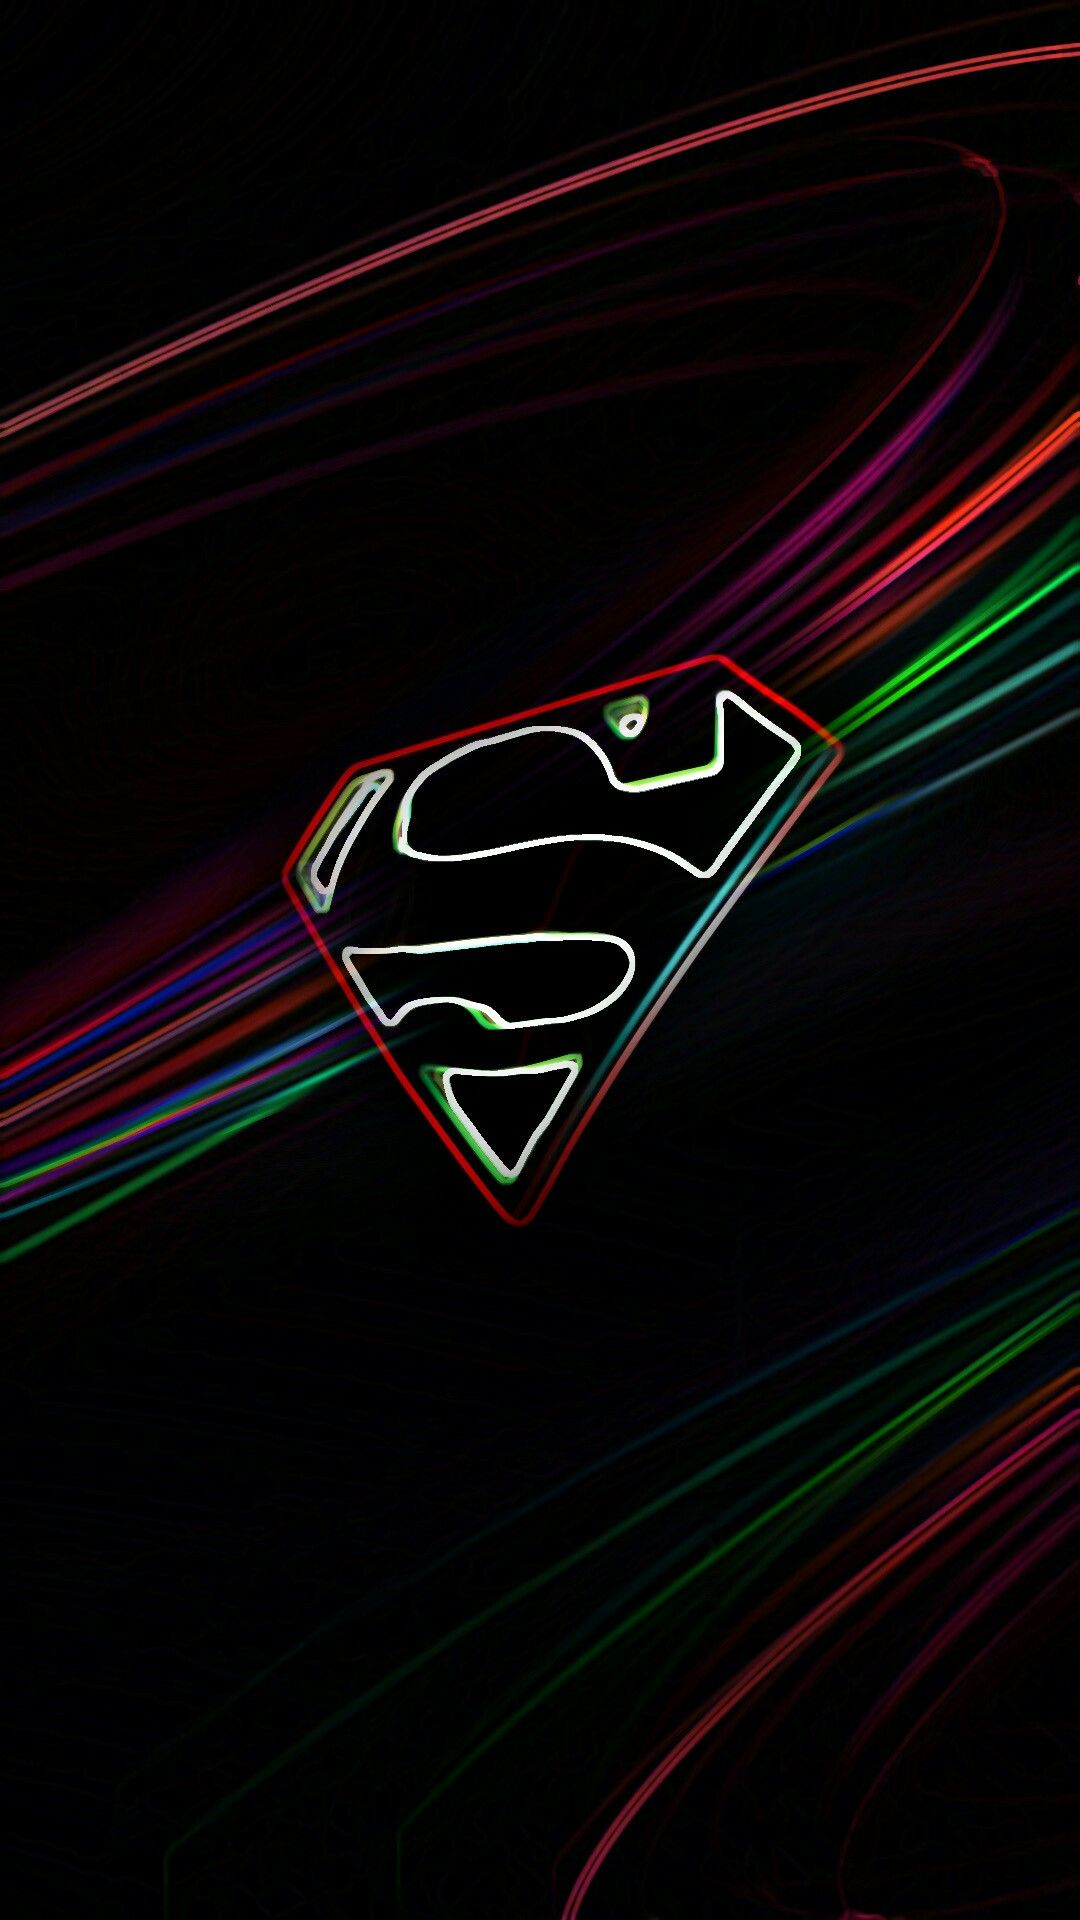 1080x1920 Superman neon wallpaper | Superman artwork, Superman wallpaper logo, Marvel spiderman art